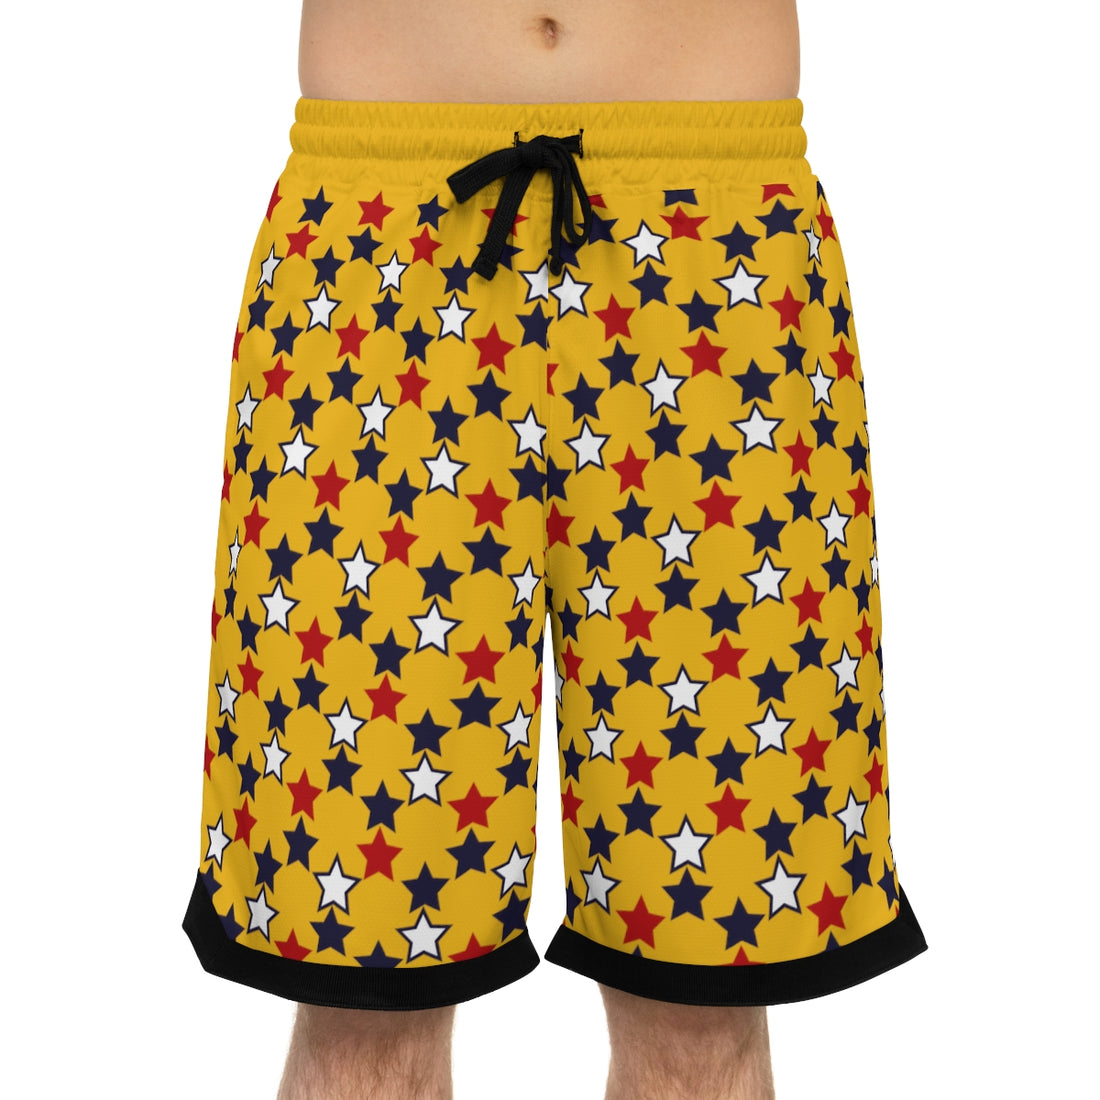 yellow star print basketball shorts for men